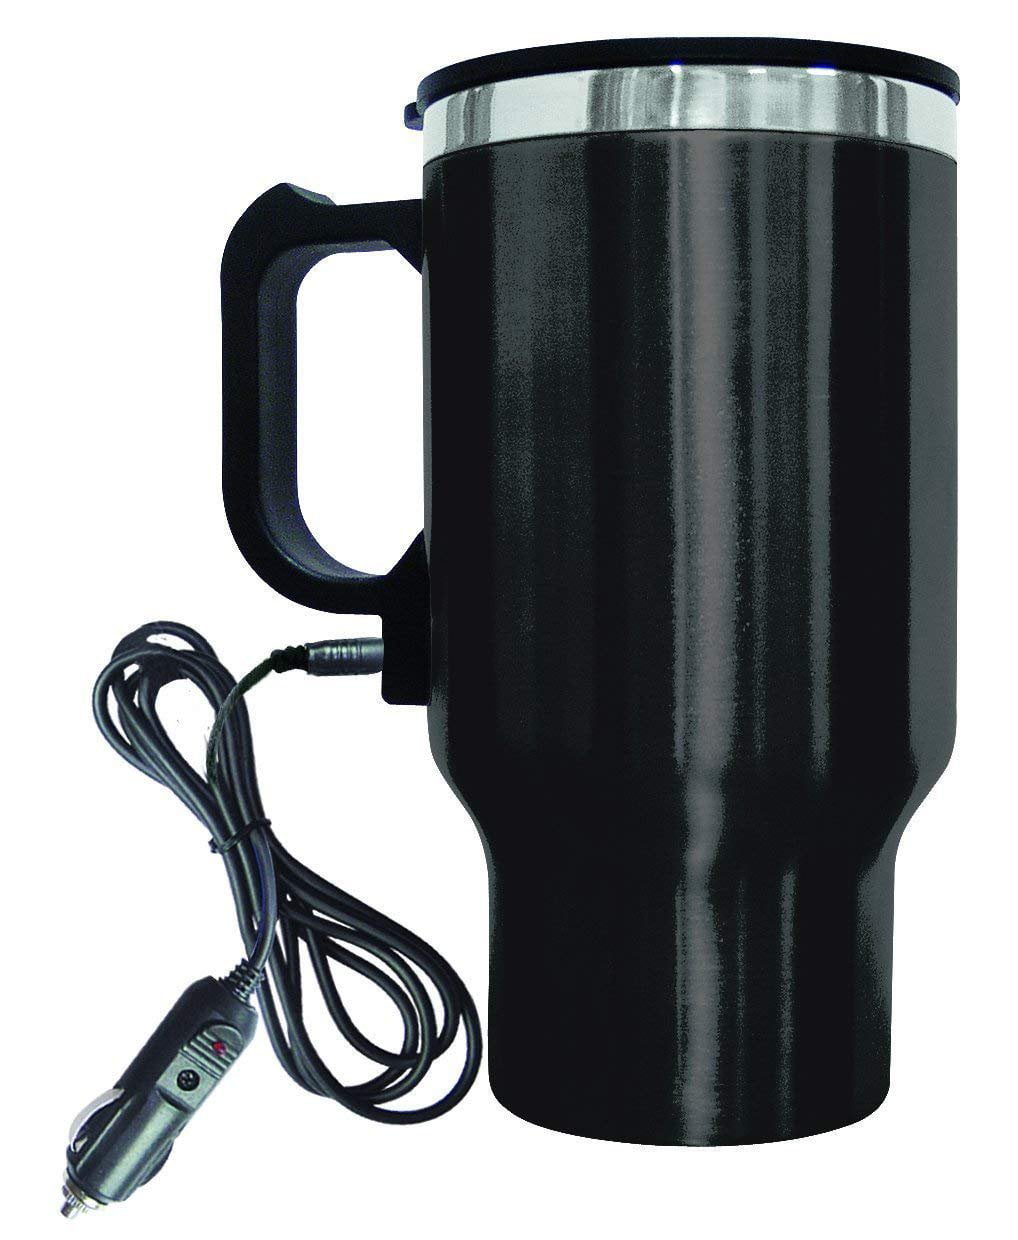 Electric Coffee or Tea Mug Stainless Steel Portable Coffee